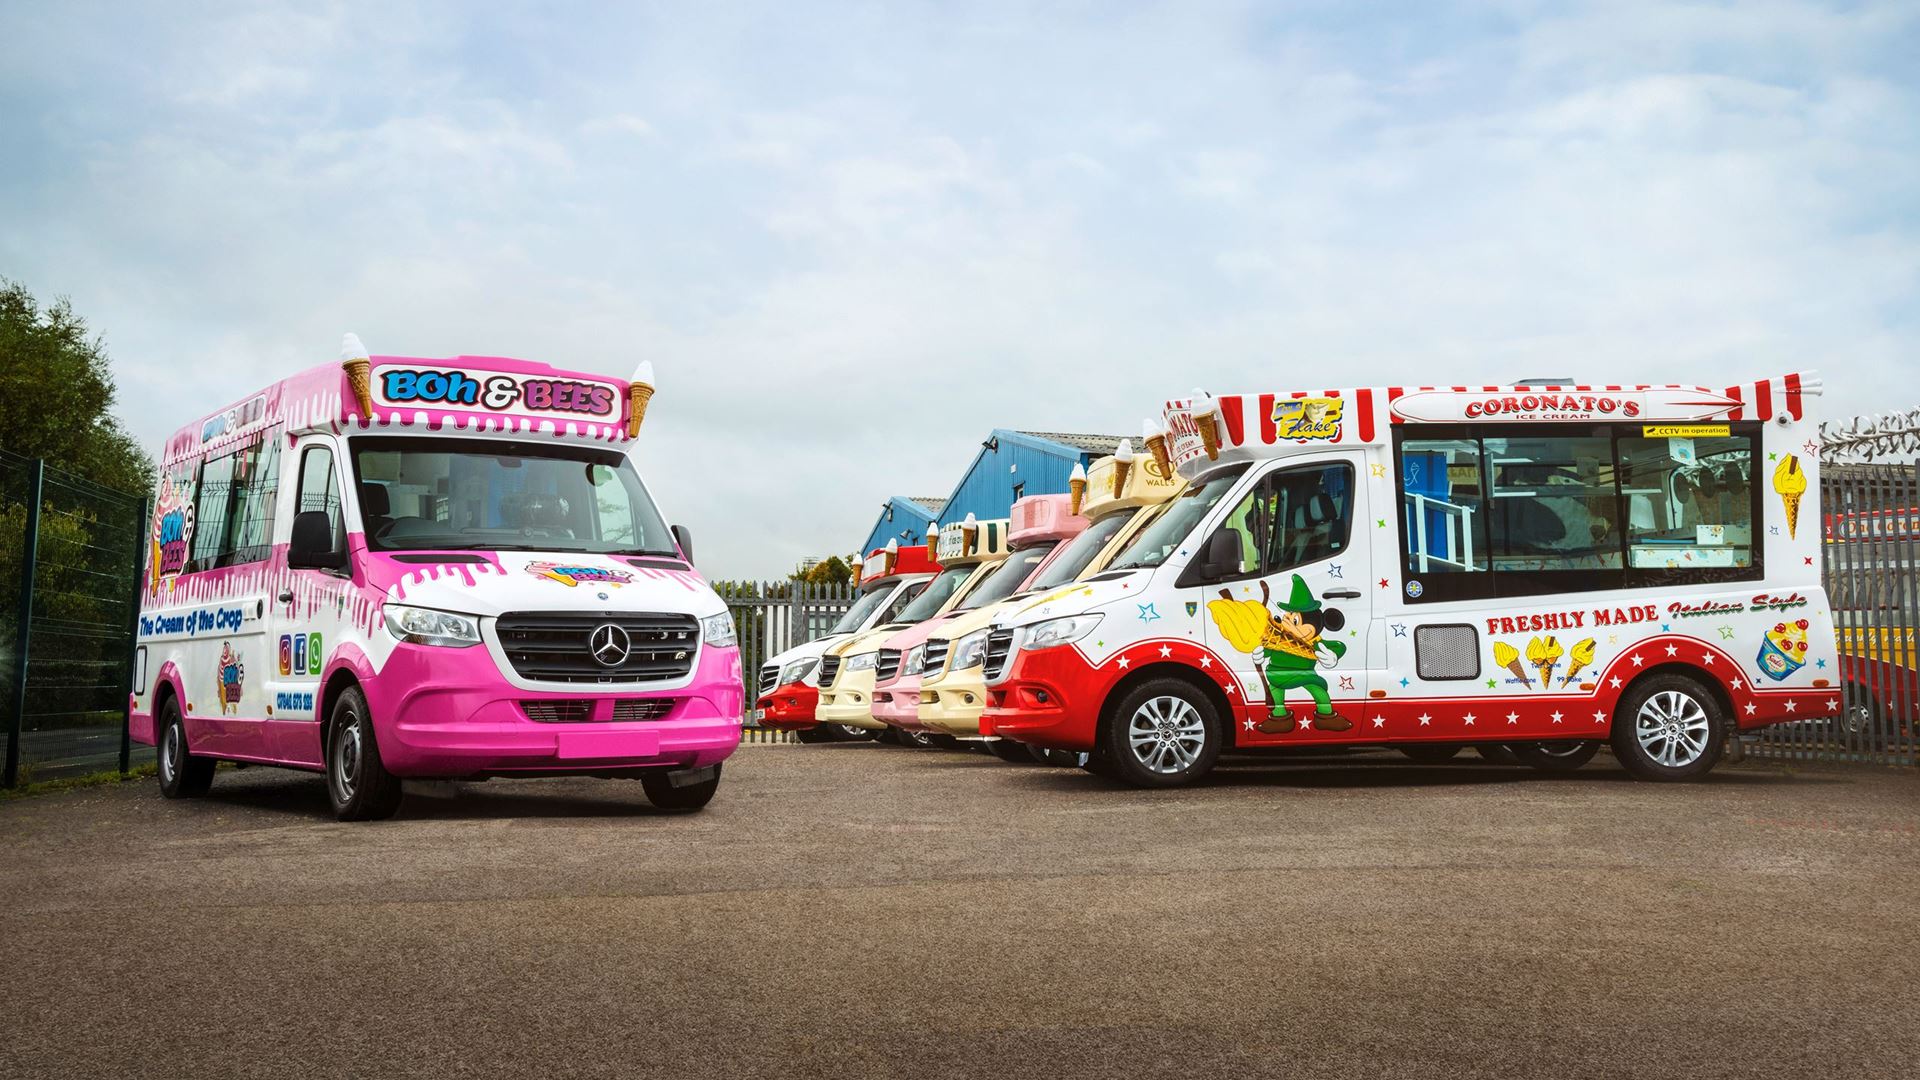 whitby morrison ice cream van for sale